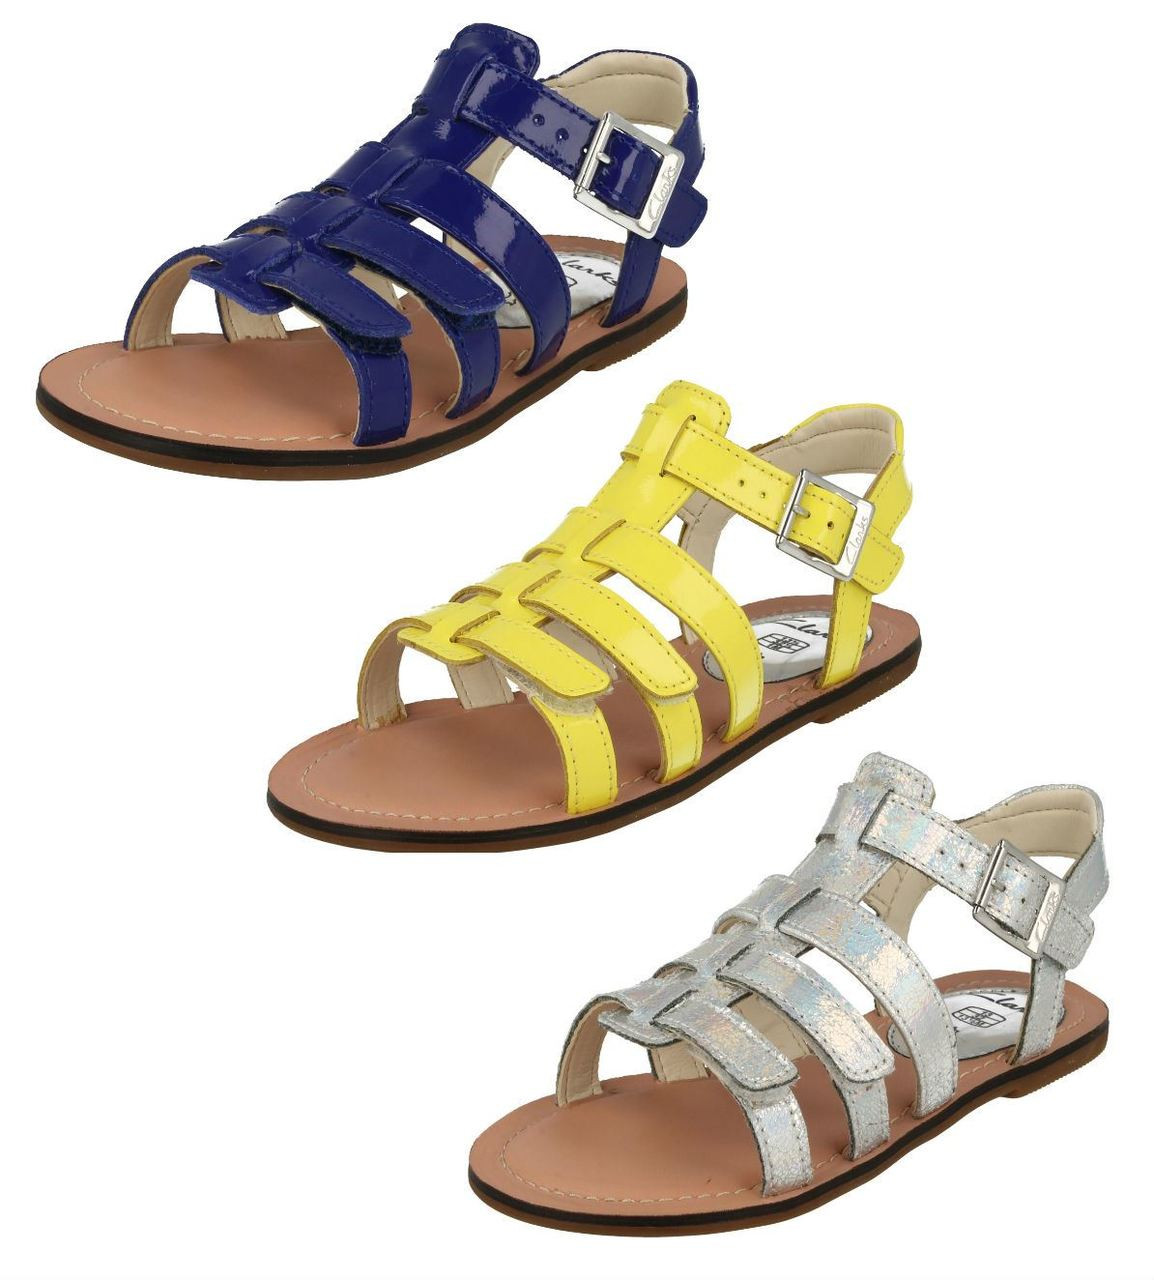 clarks gladiator sandals